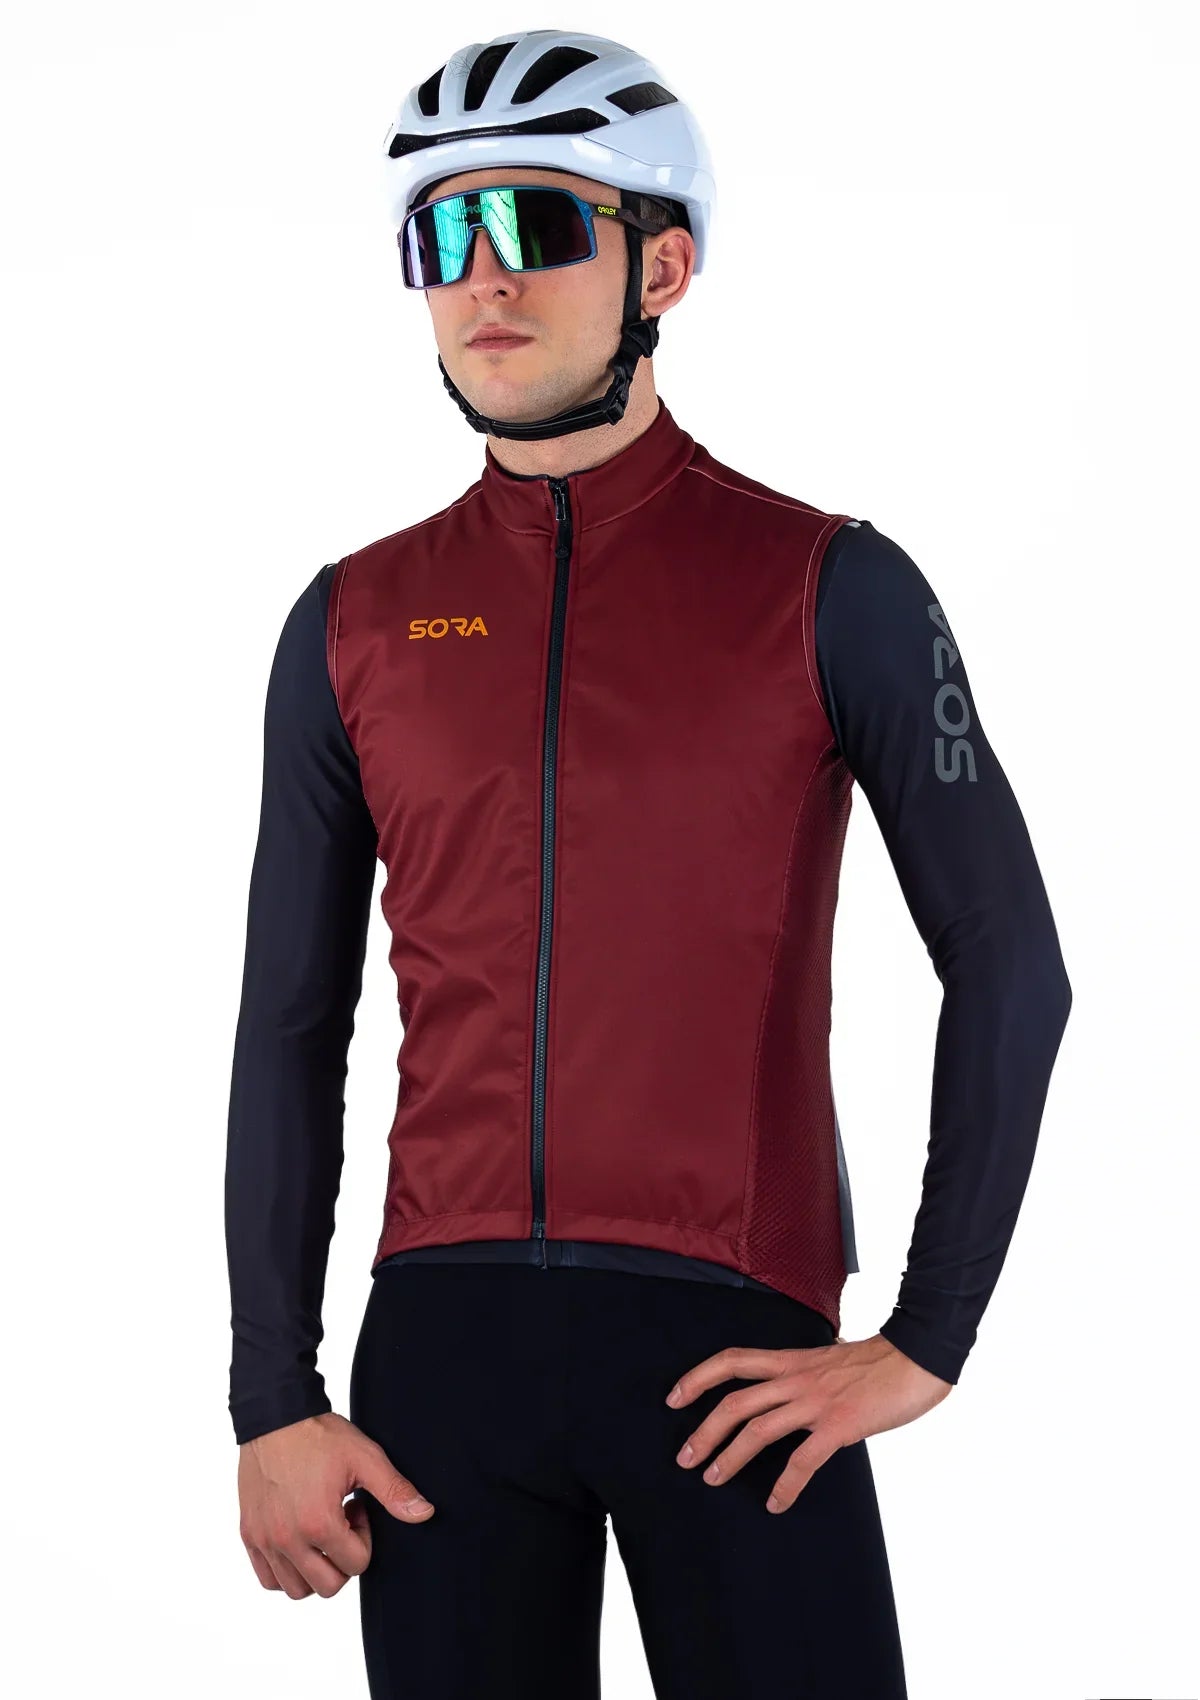 Boost winter cycling vest Red Velvet